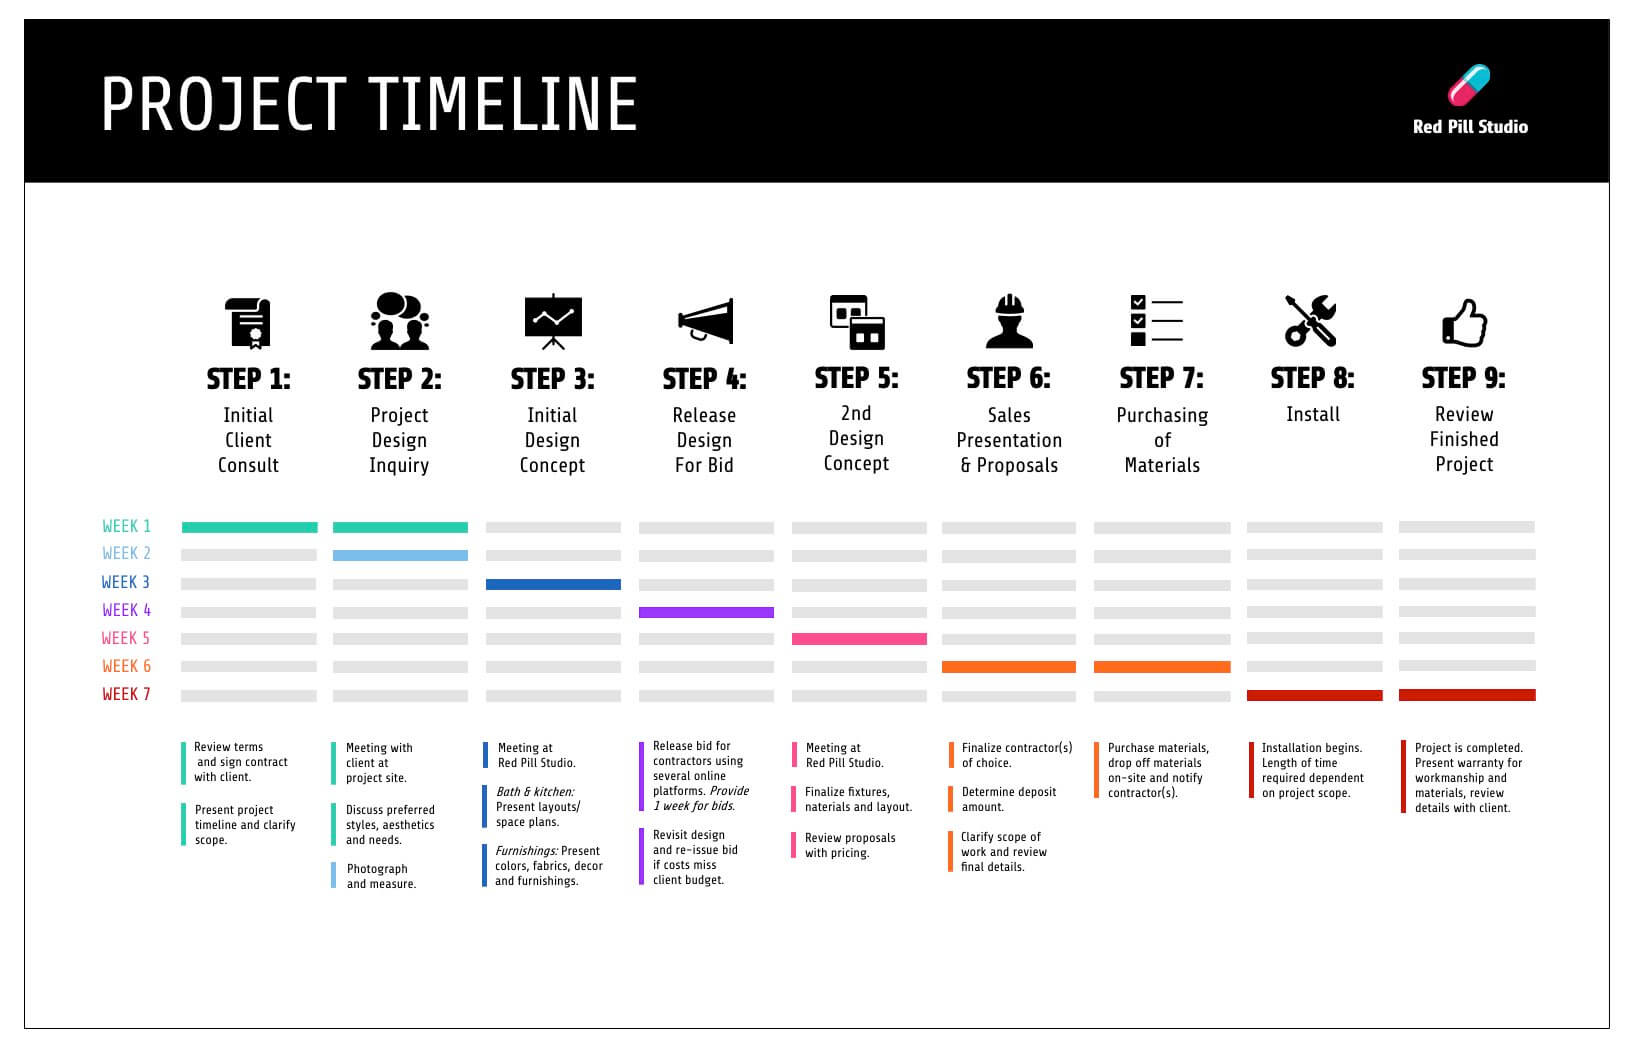 Project Plan Timeline Infographic Design